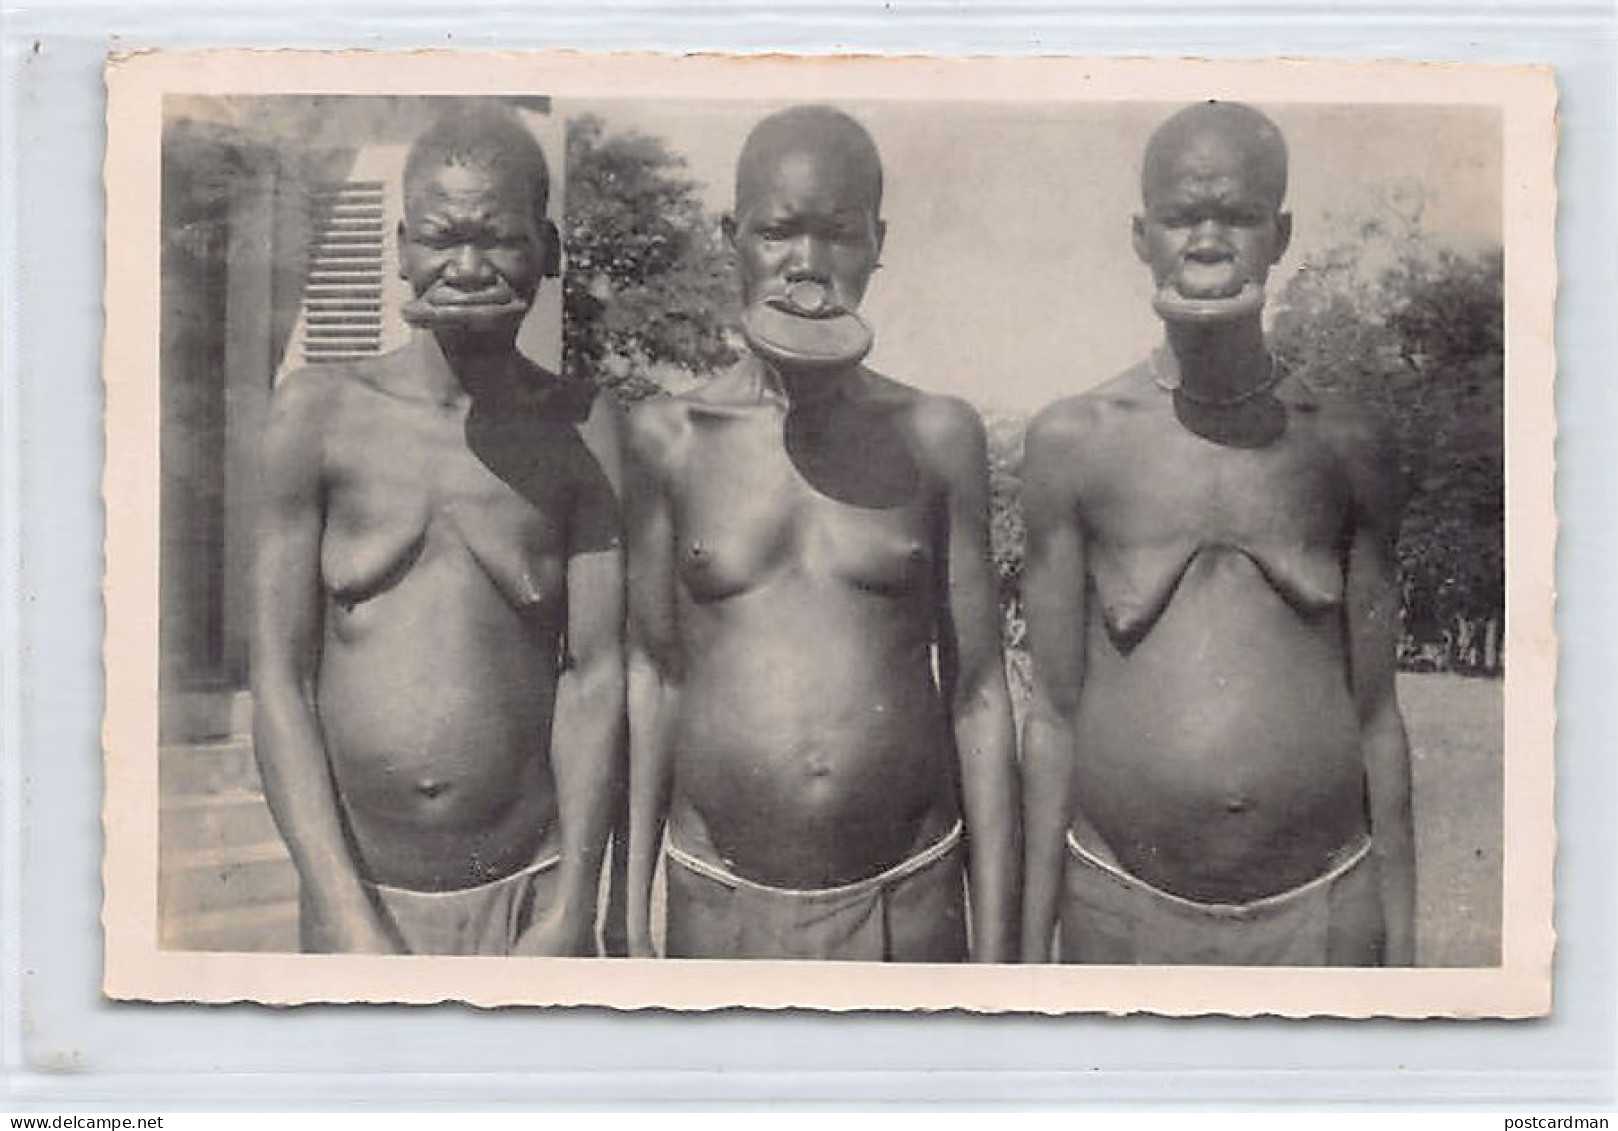 Centrafrique - Femmes à Plateaux - Race Sara Kaba - Ed. M. Balard 742 - Centraal-Afrikaanse Republiek